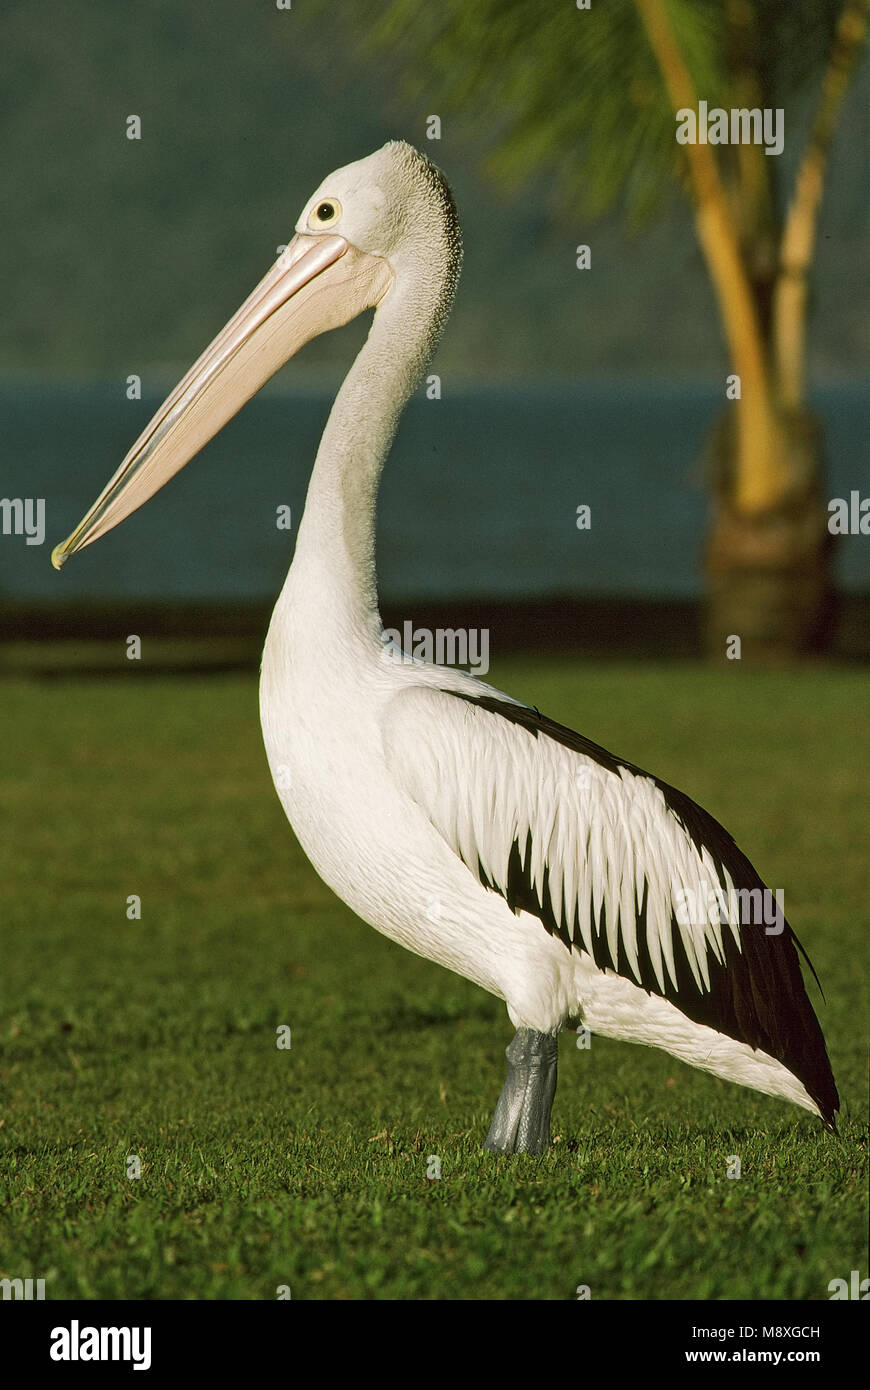 Australian Pelican stehend; Brilpelikaan staand Stockfoto